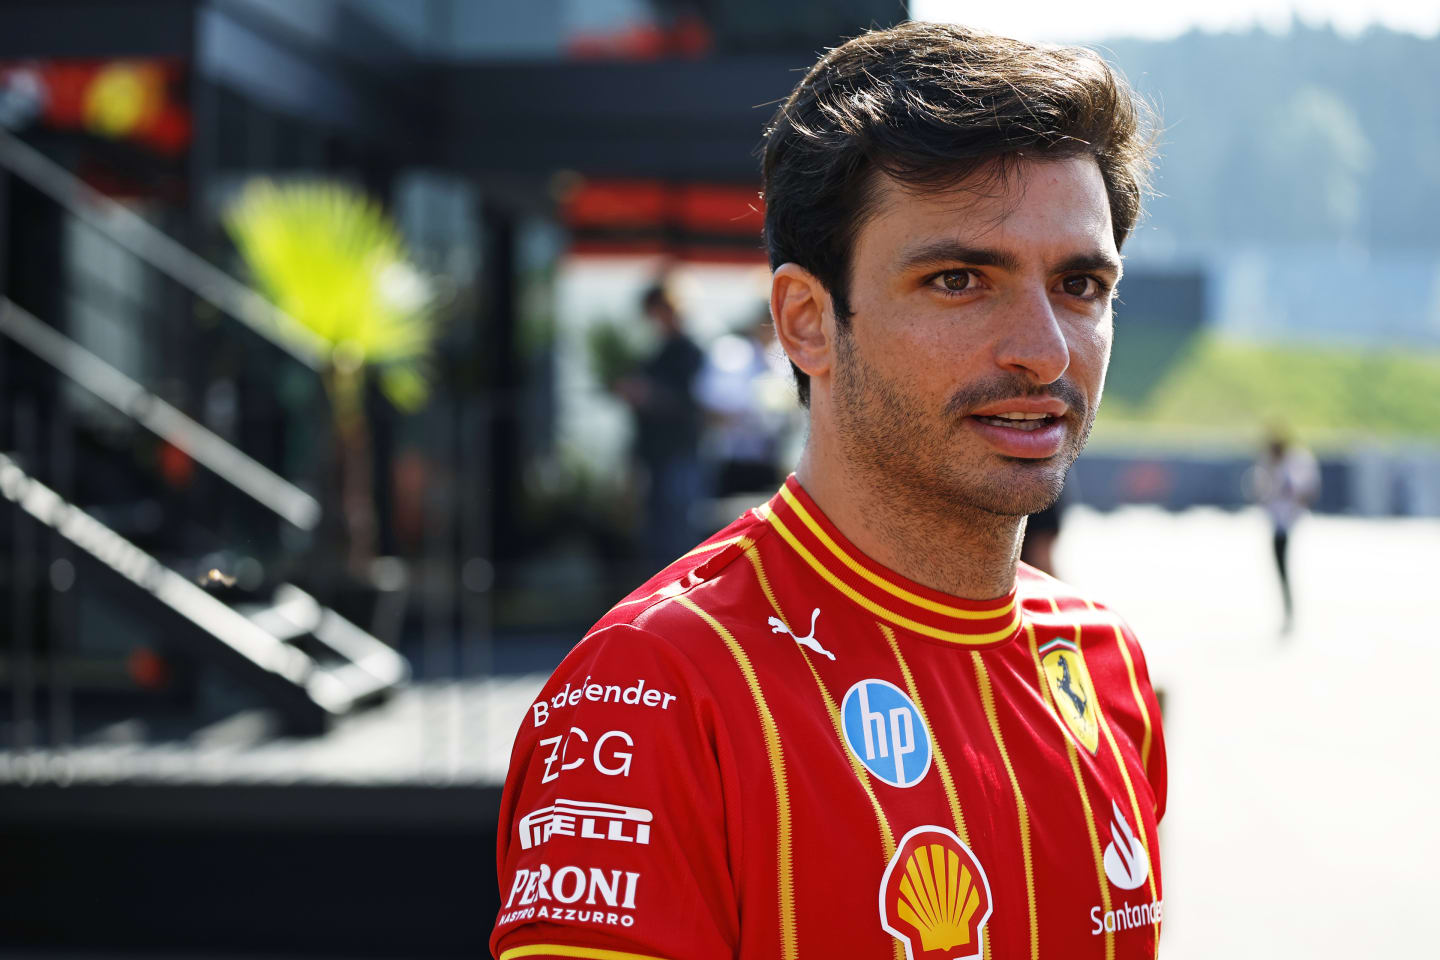 SPIELBERG, AUSTRIA - JUNE 29: Carlos Sainz of Spain and Ferrari walks in the Paddock prior to the